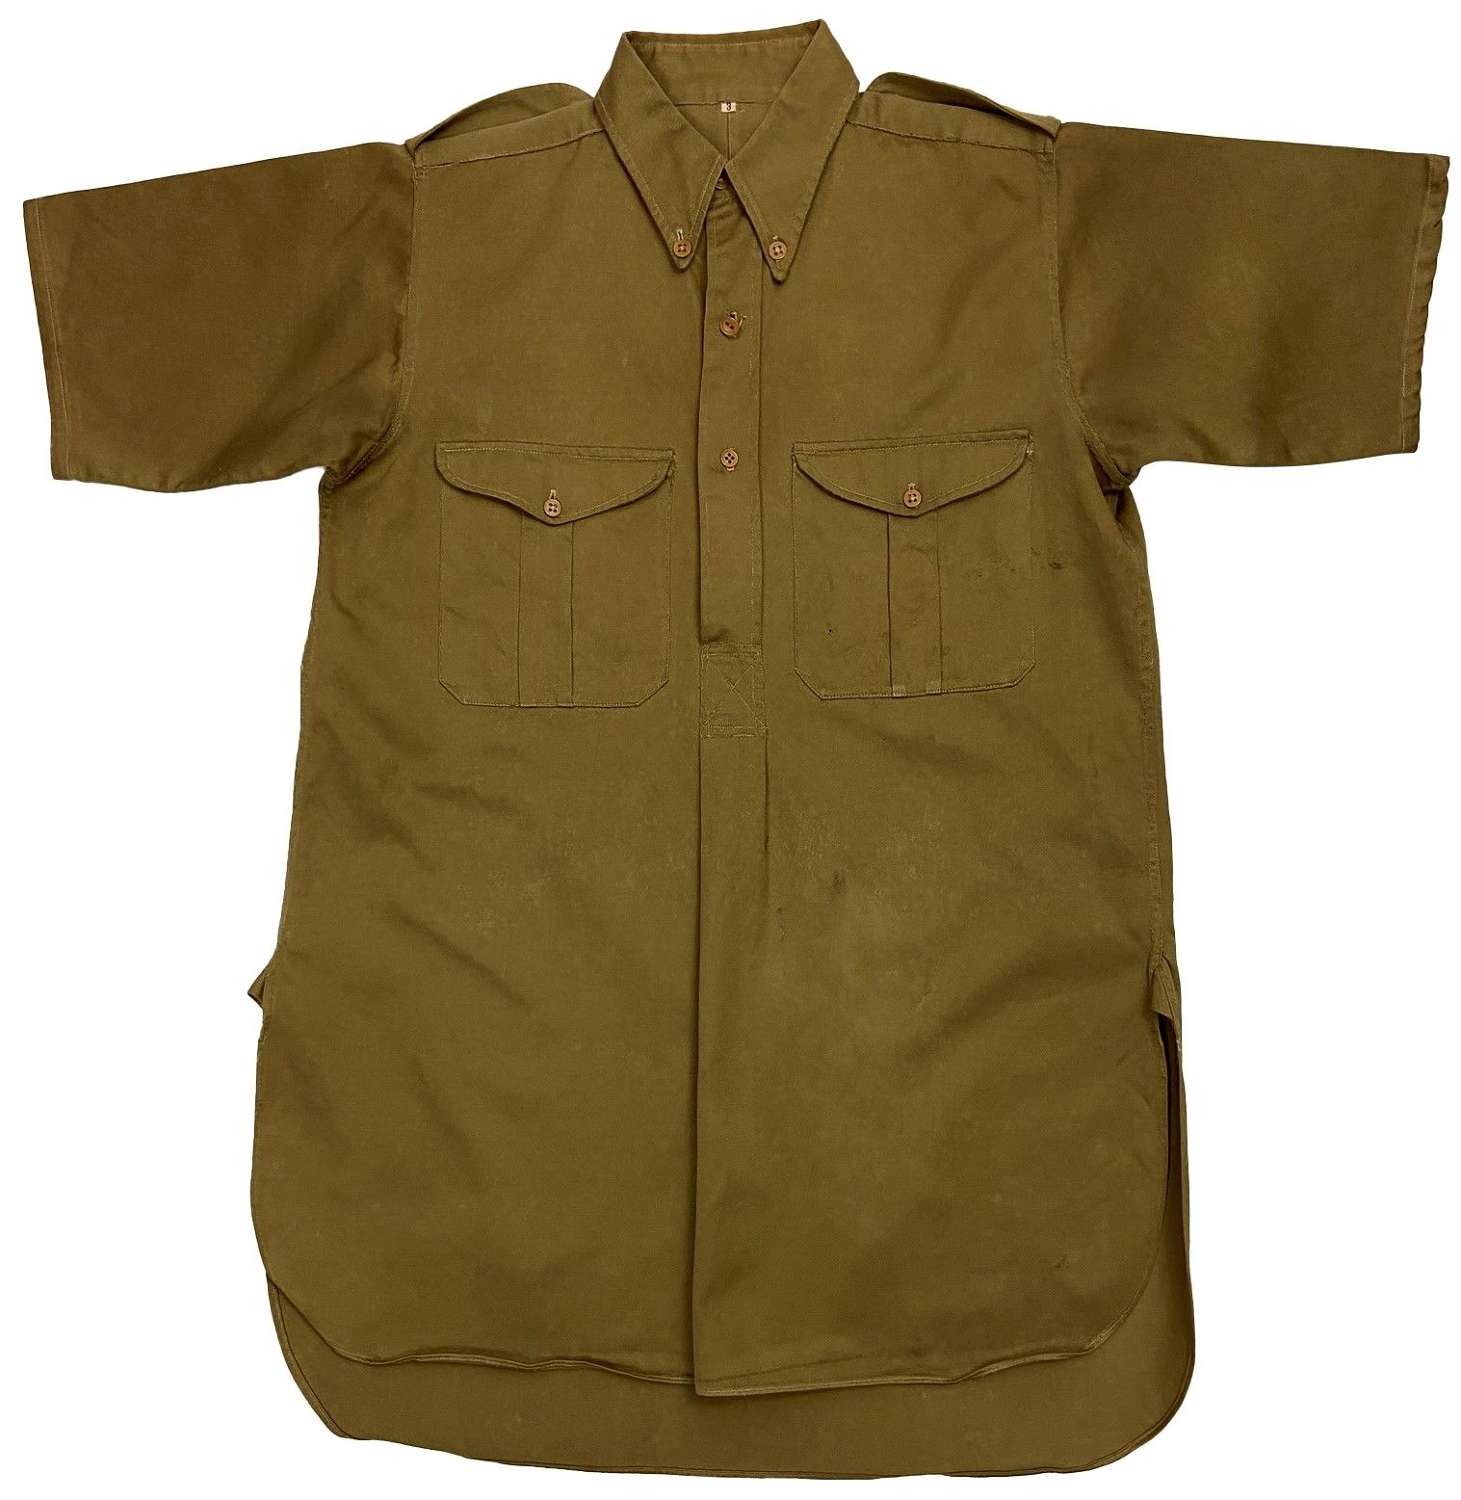 Original 1940s Men's Cotton Drill Shirt with Button Down Collar